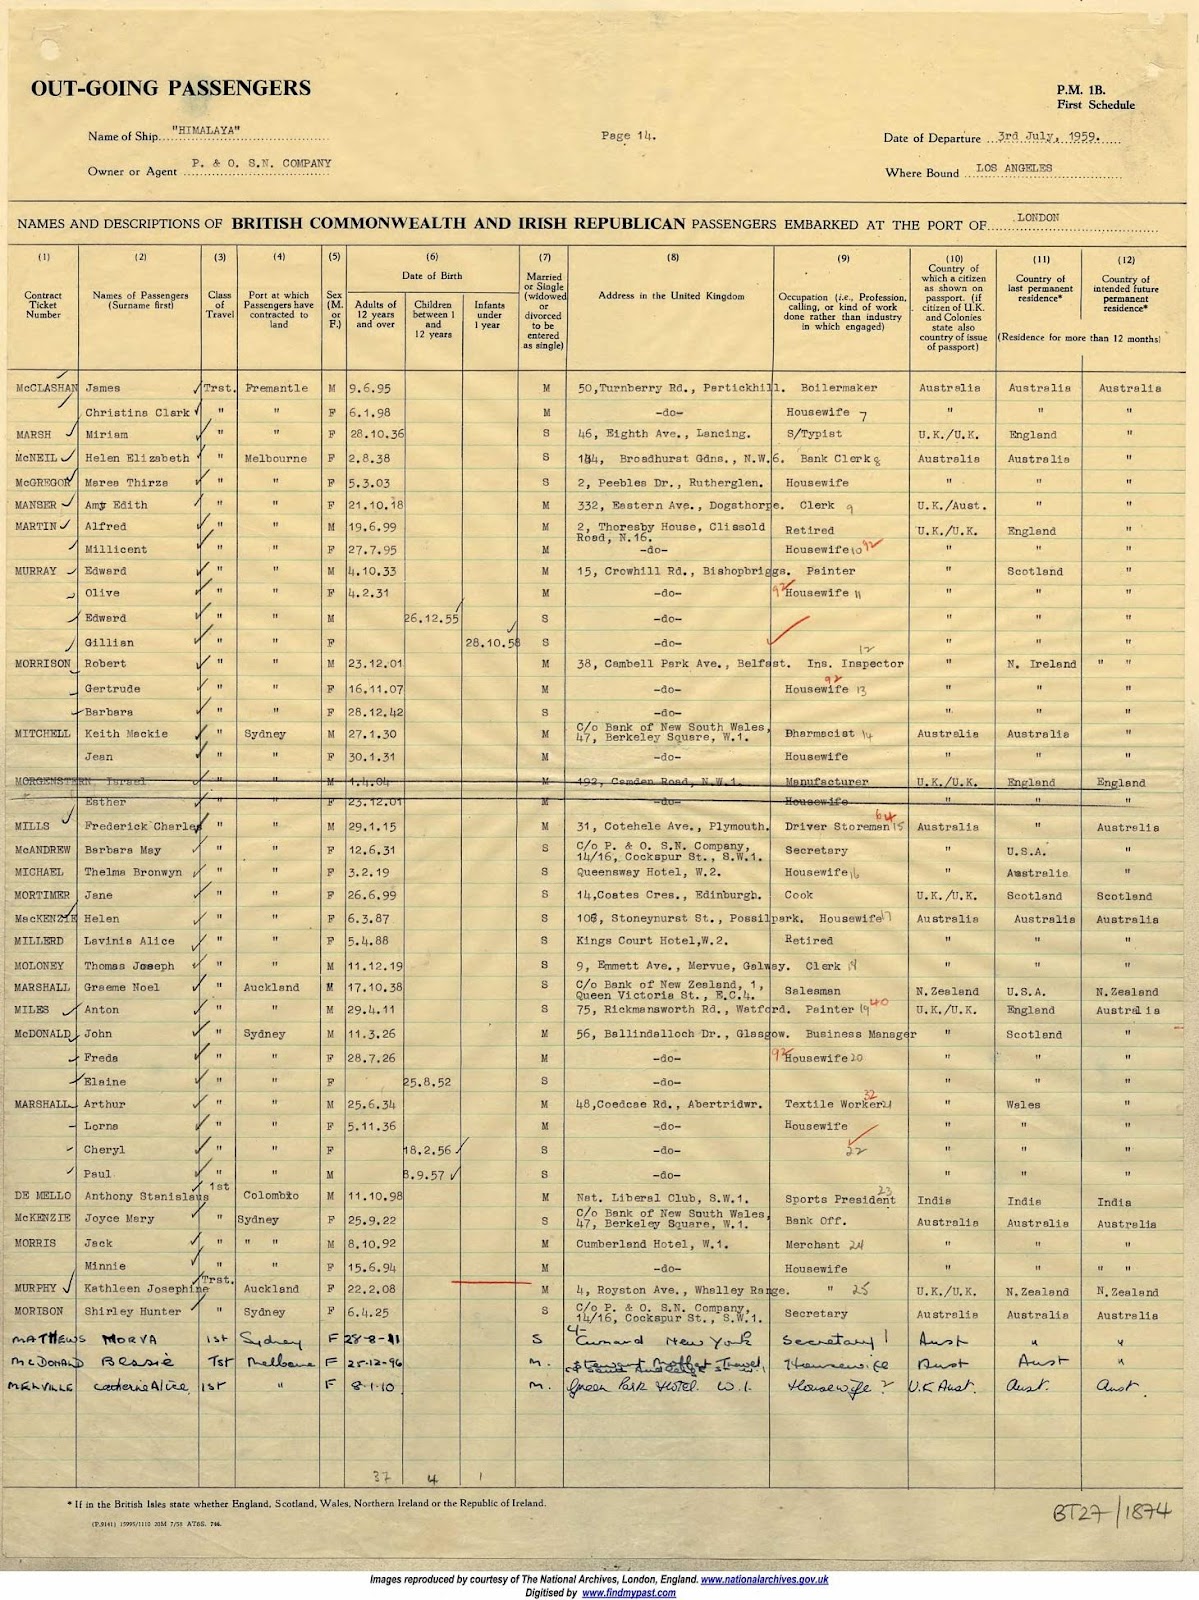 C:\Users\Main user\Documents\Ancestry\Dadaji\Anton Ships\Anton Miles Passage to NZ 1959 Original.jpg